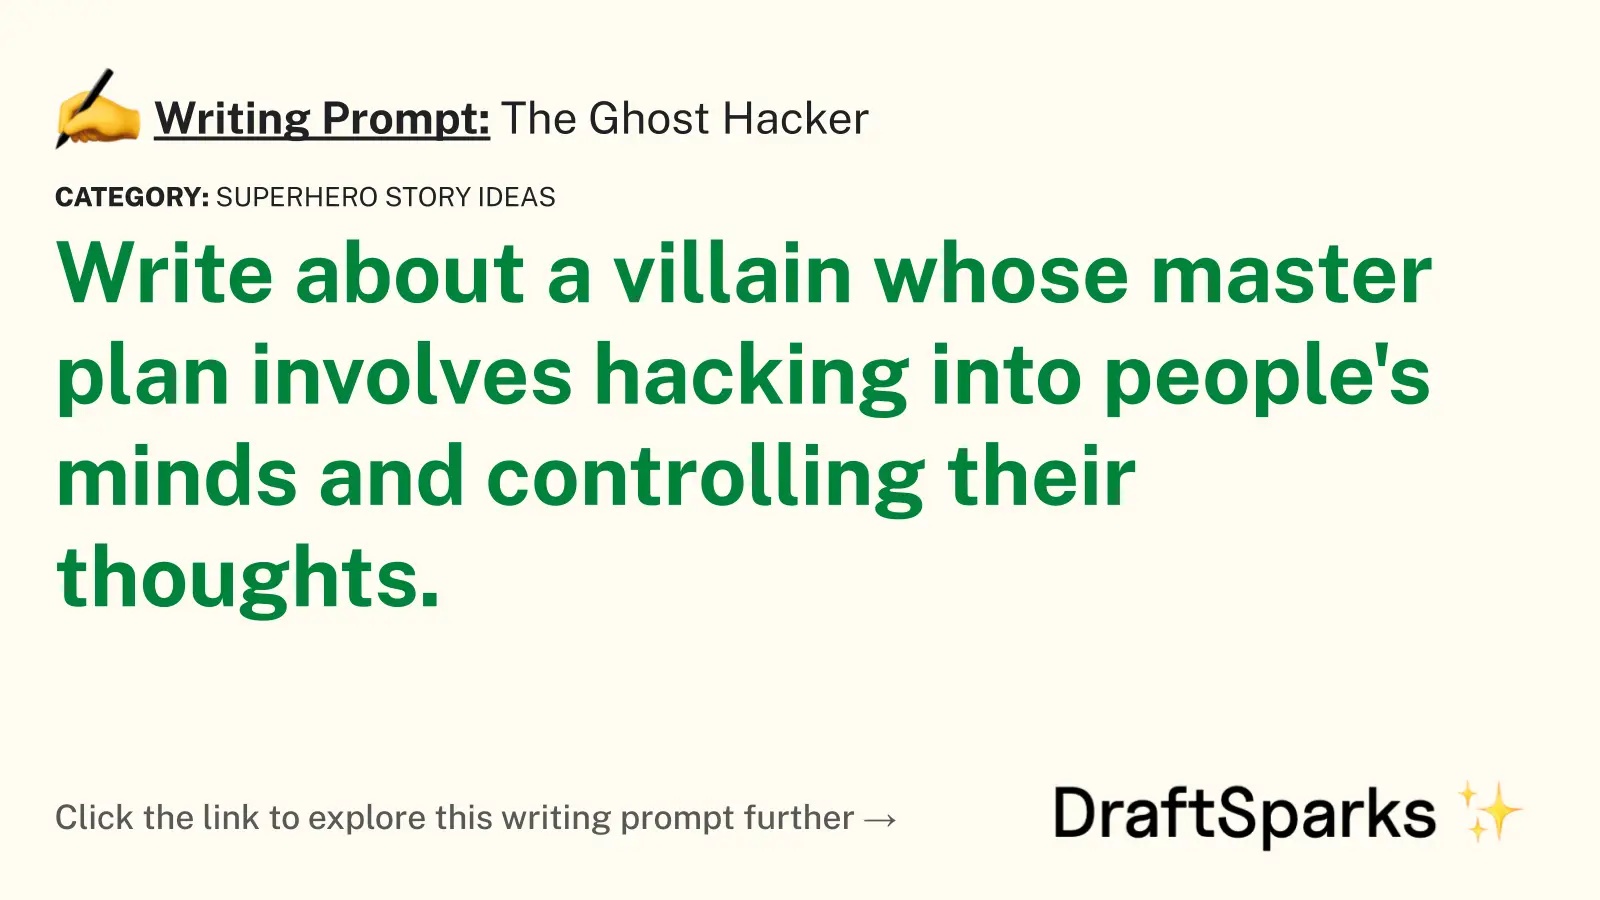 The Ghost Hacker